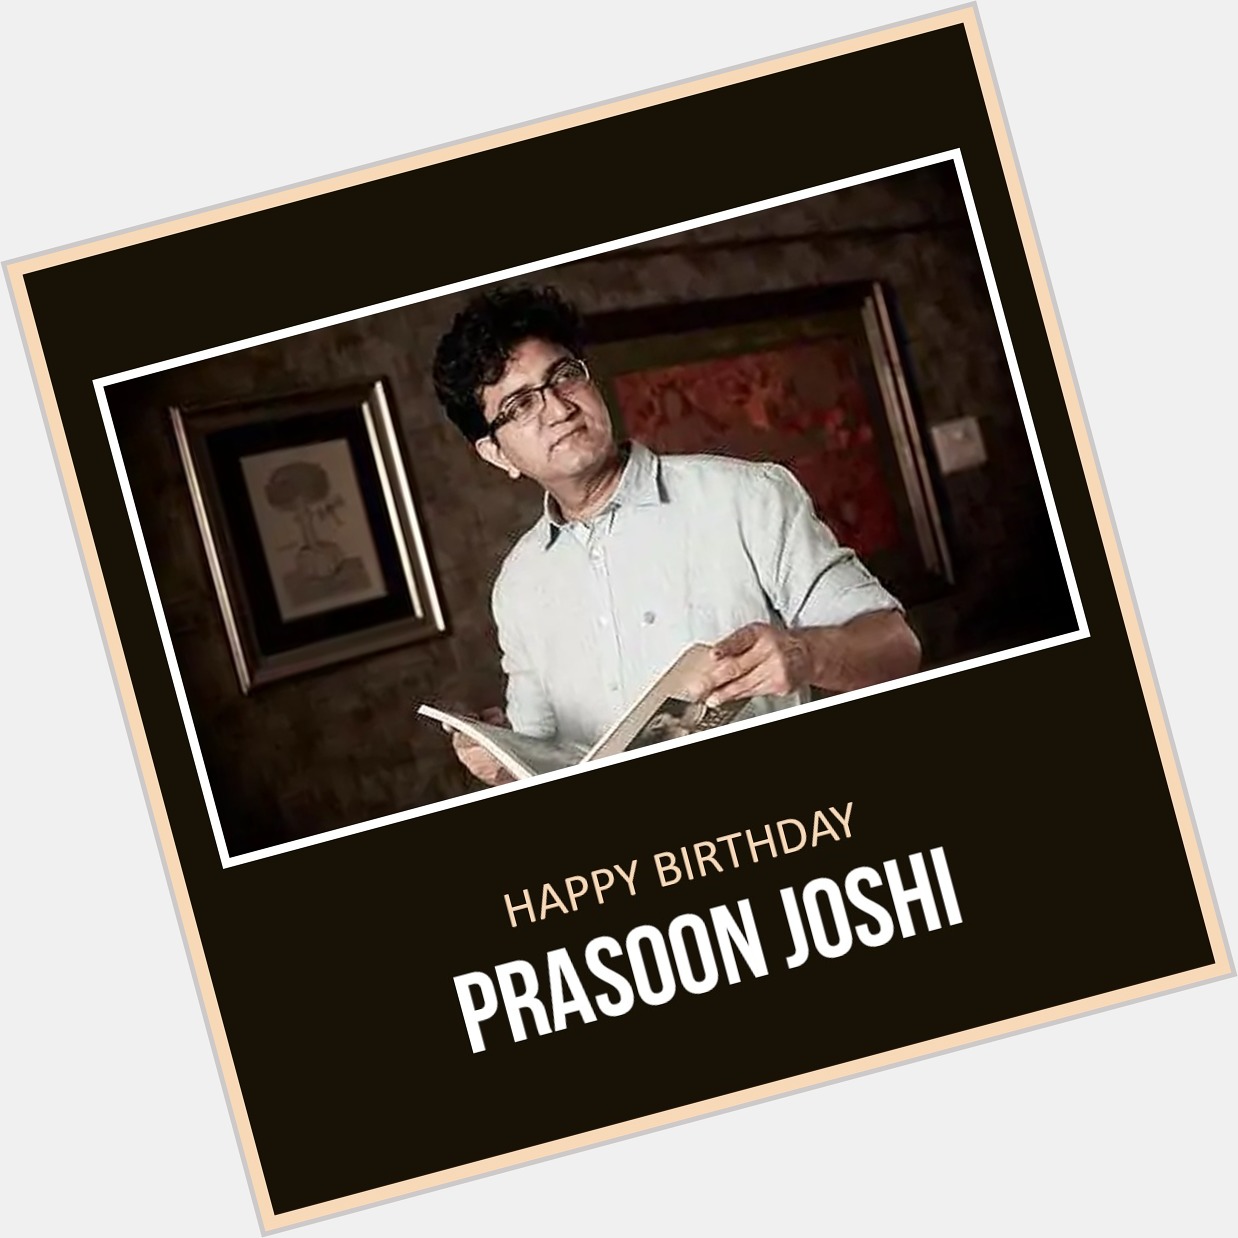 Happy Birthday prasoon joshi. Stay happy and healthy sir   